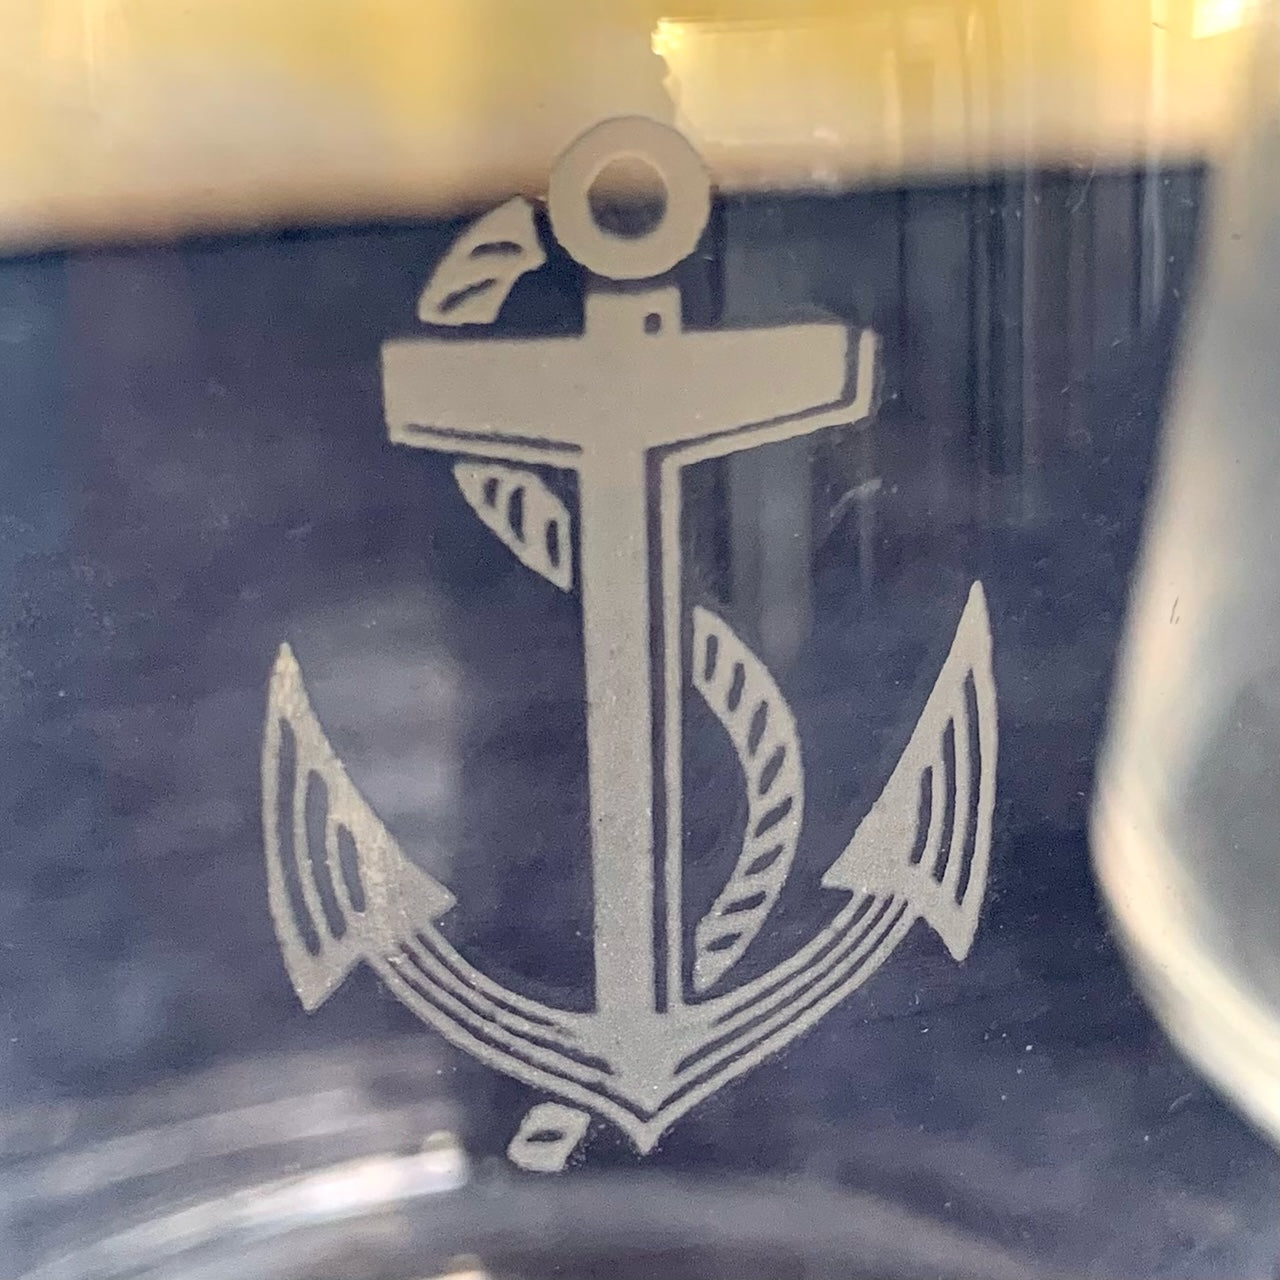 Carafe en verre de la Marine nationale gravée de l'ancre.